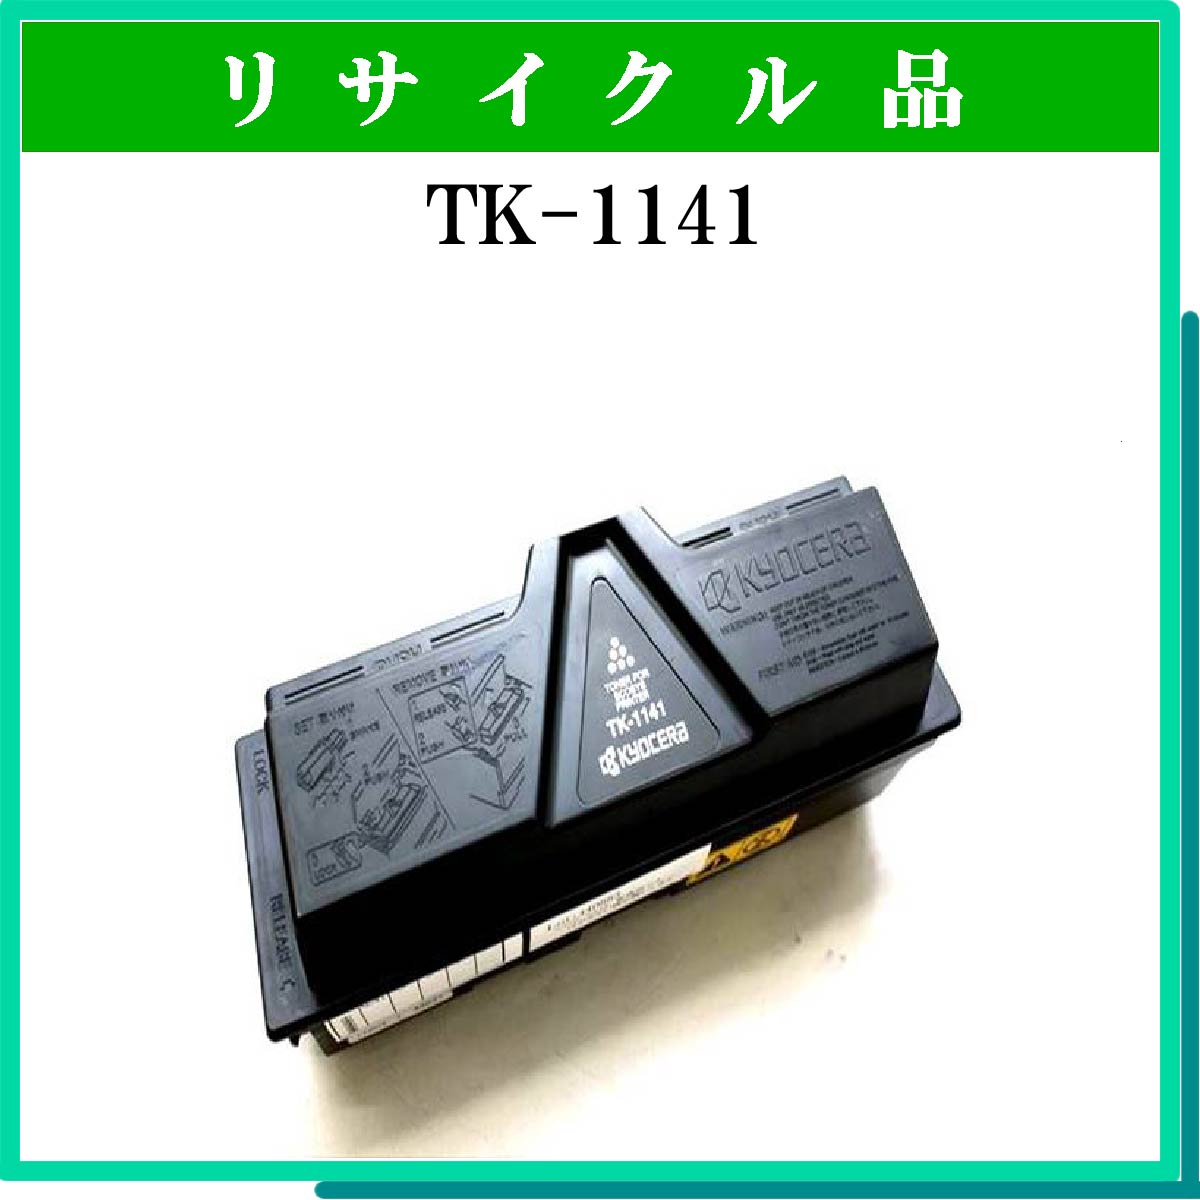 TK-1141 - ウインドウを閉じる